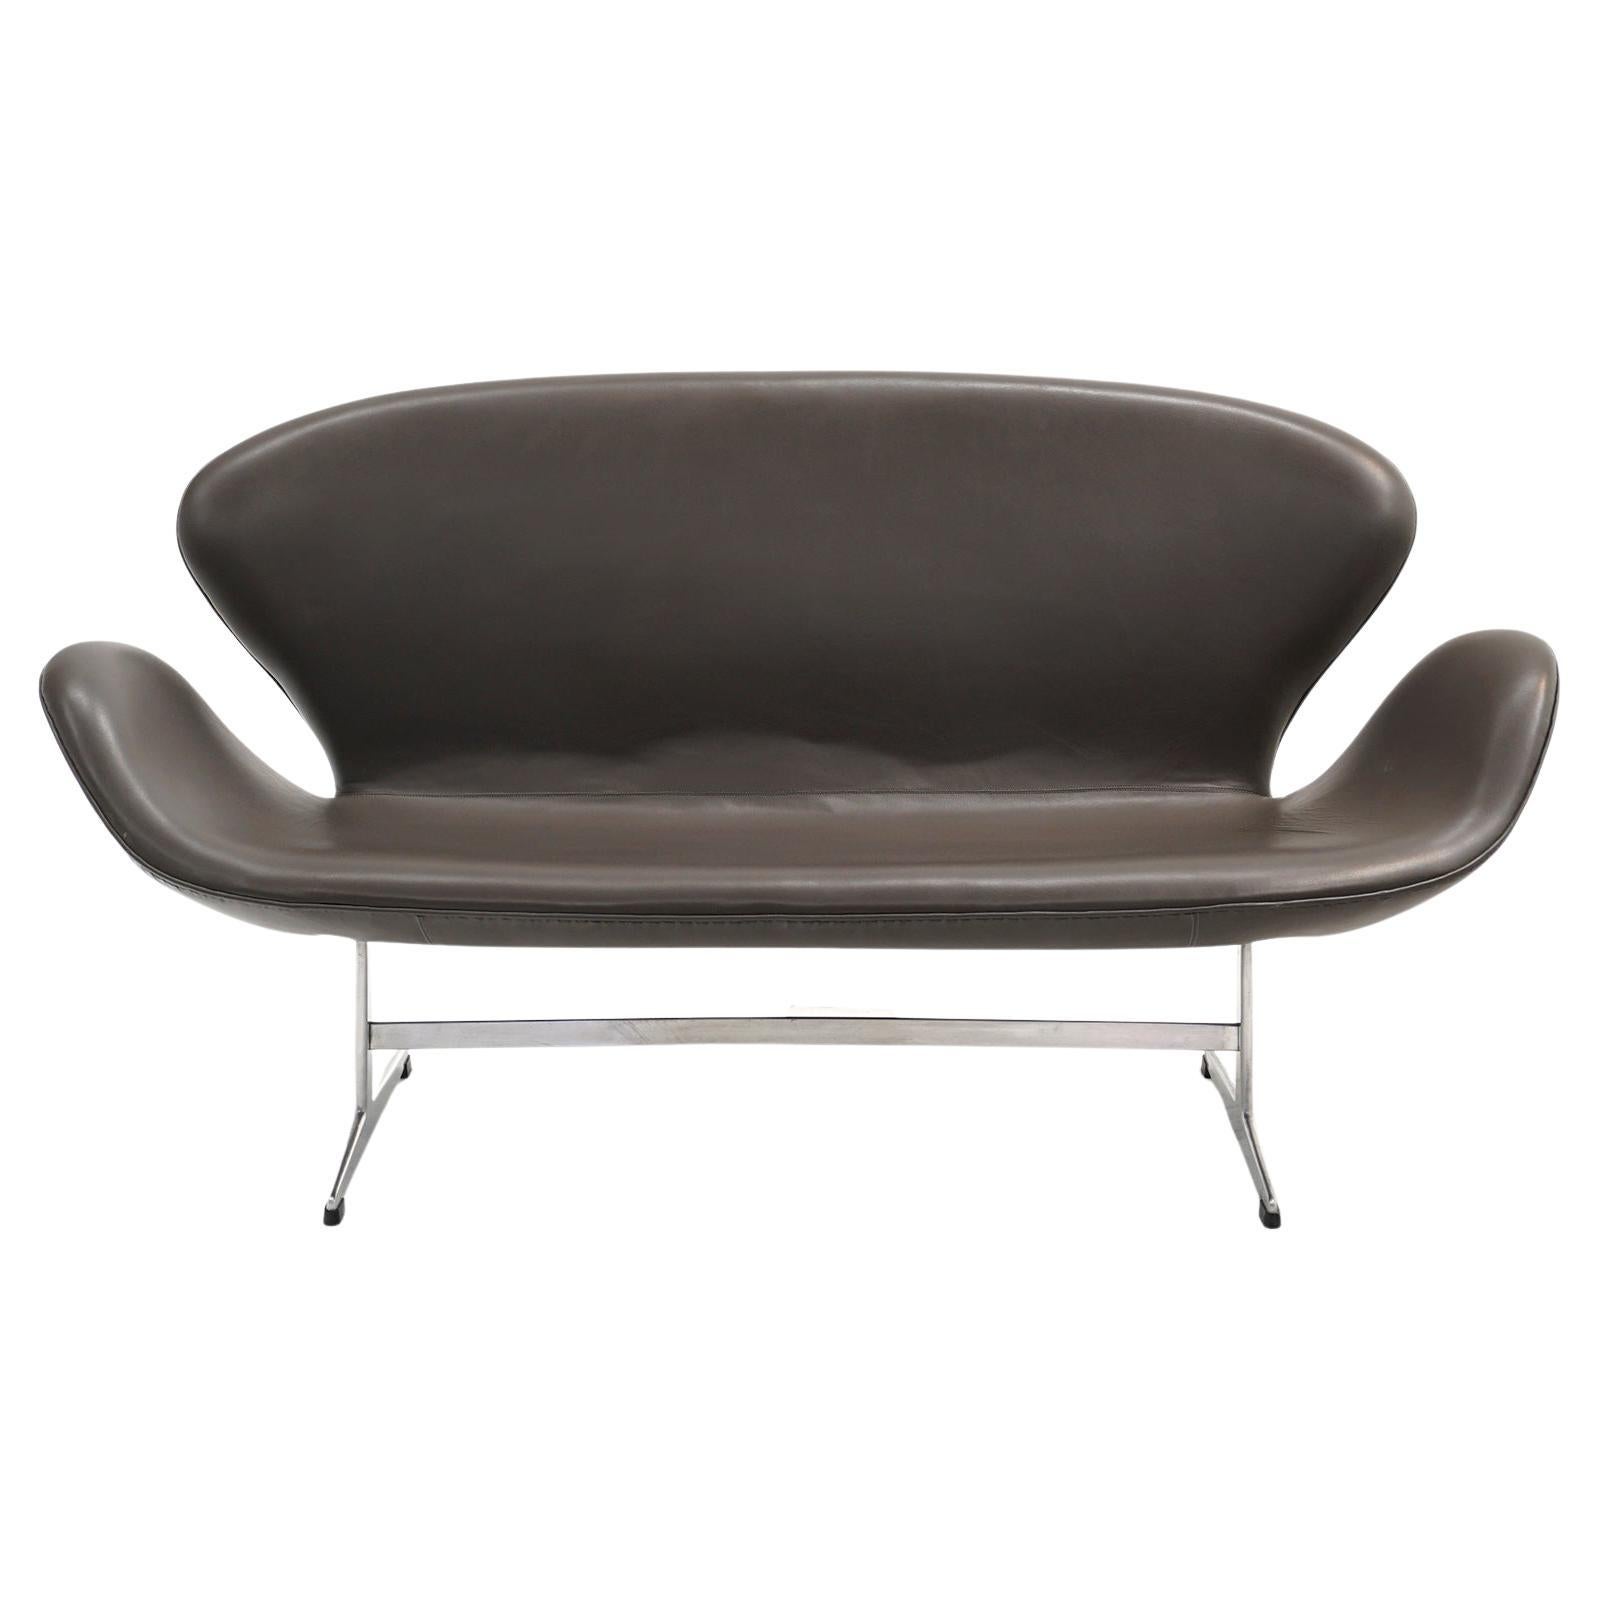 Swan Settee / Sofa by Arne Jacobsen for Fritz Hansen, Original Leather